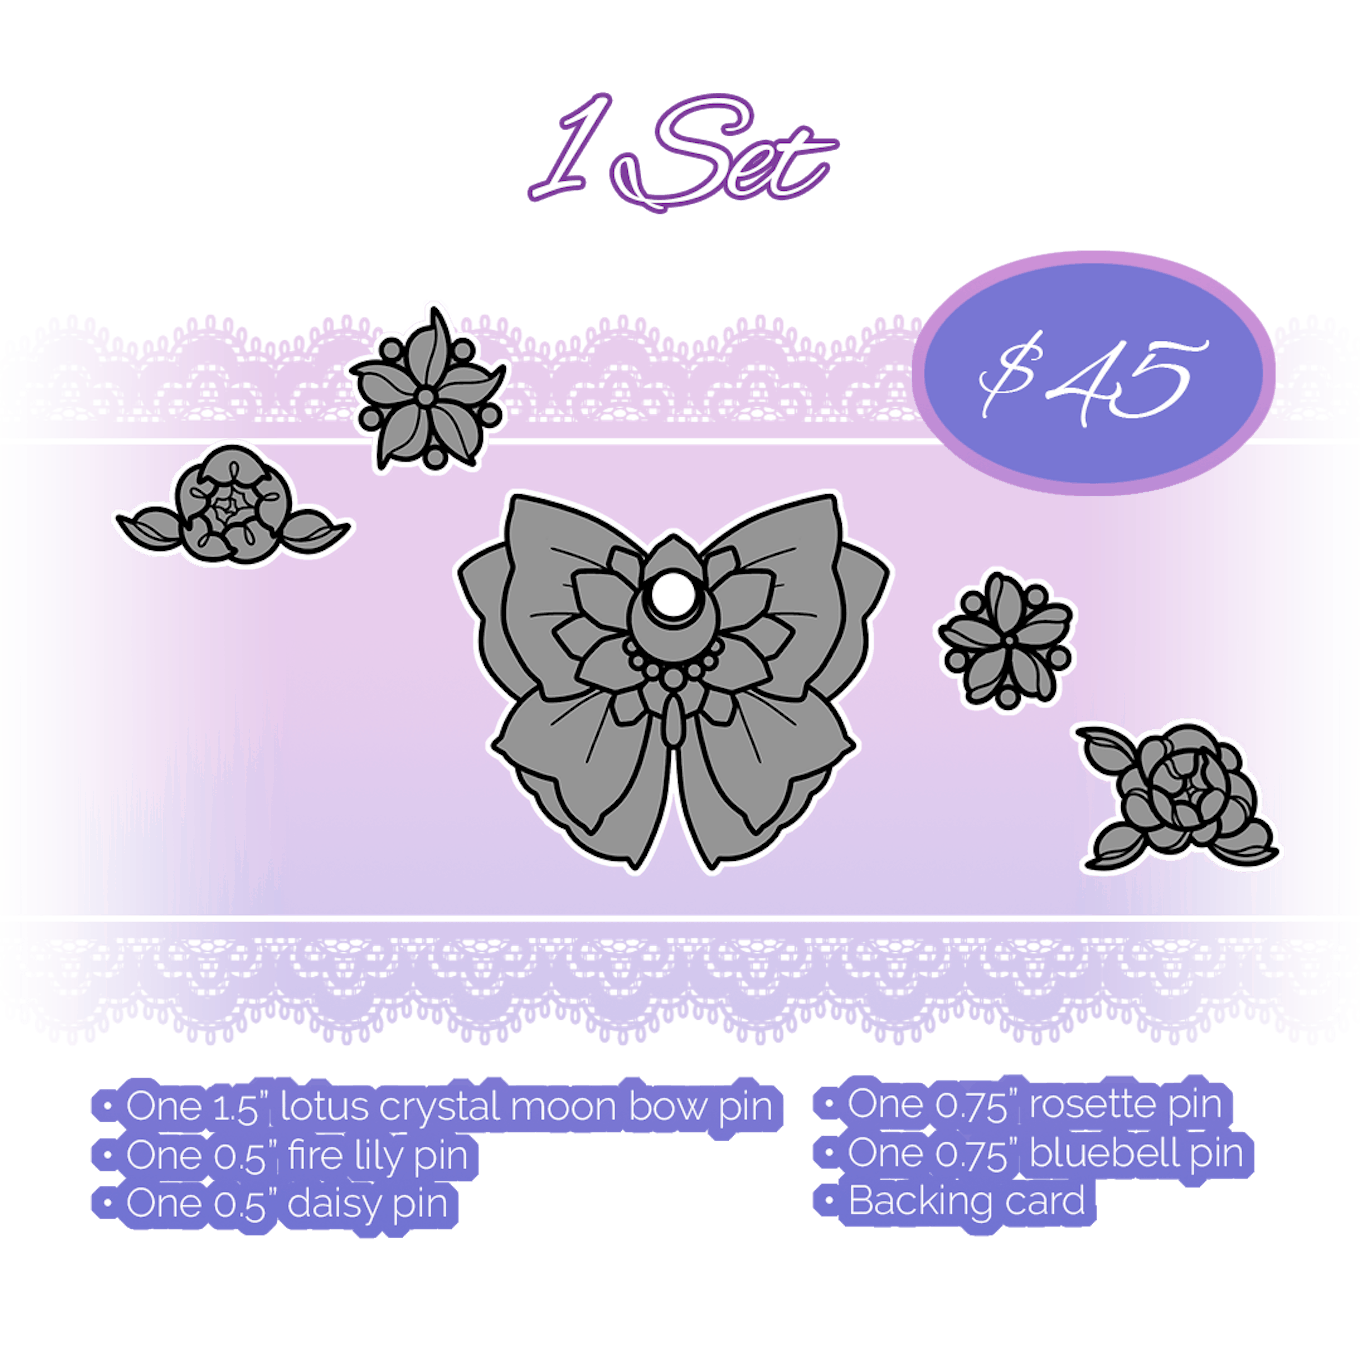 1 set of pins 1 1.5” lotus crystal moon bow pin 1 0.5” fire lily pin 1 0.5” daisy pin 1 0.75” rosette pin 1 0.75” bluebell pin Backing card